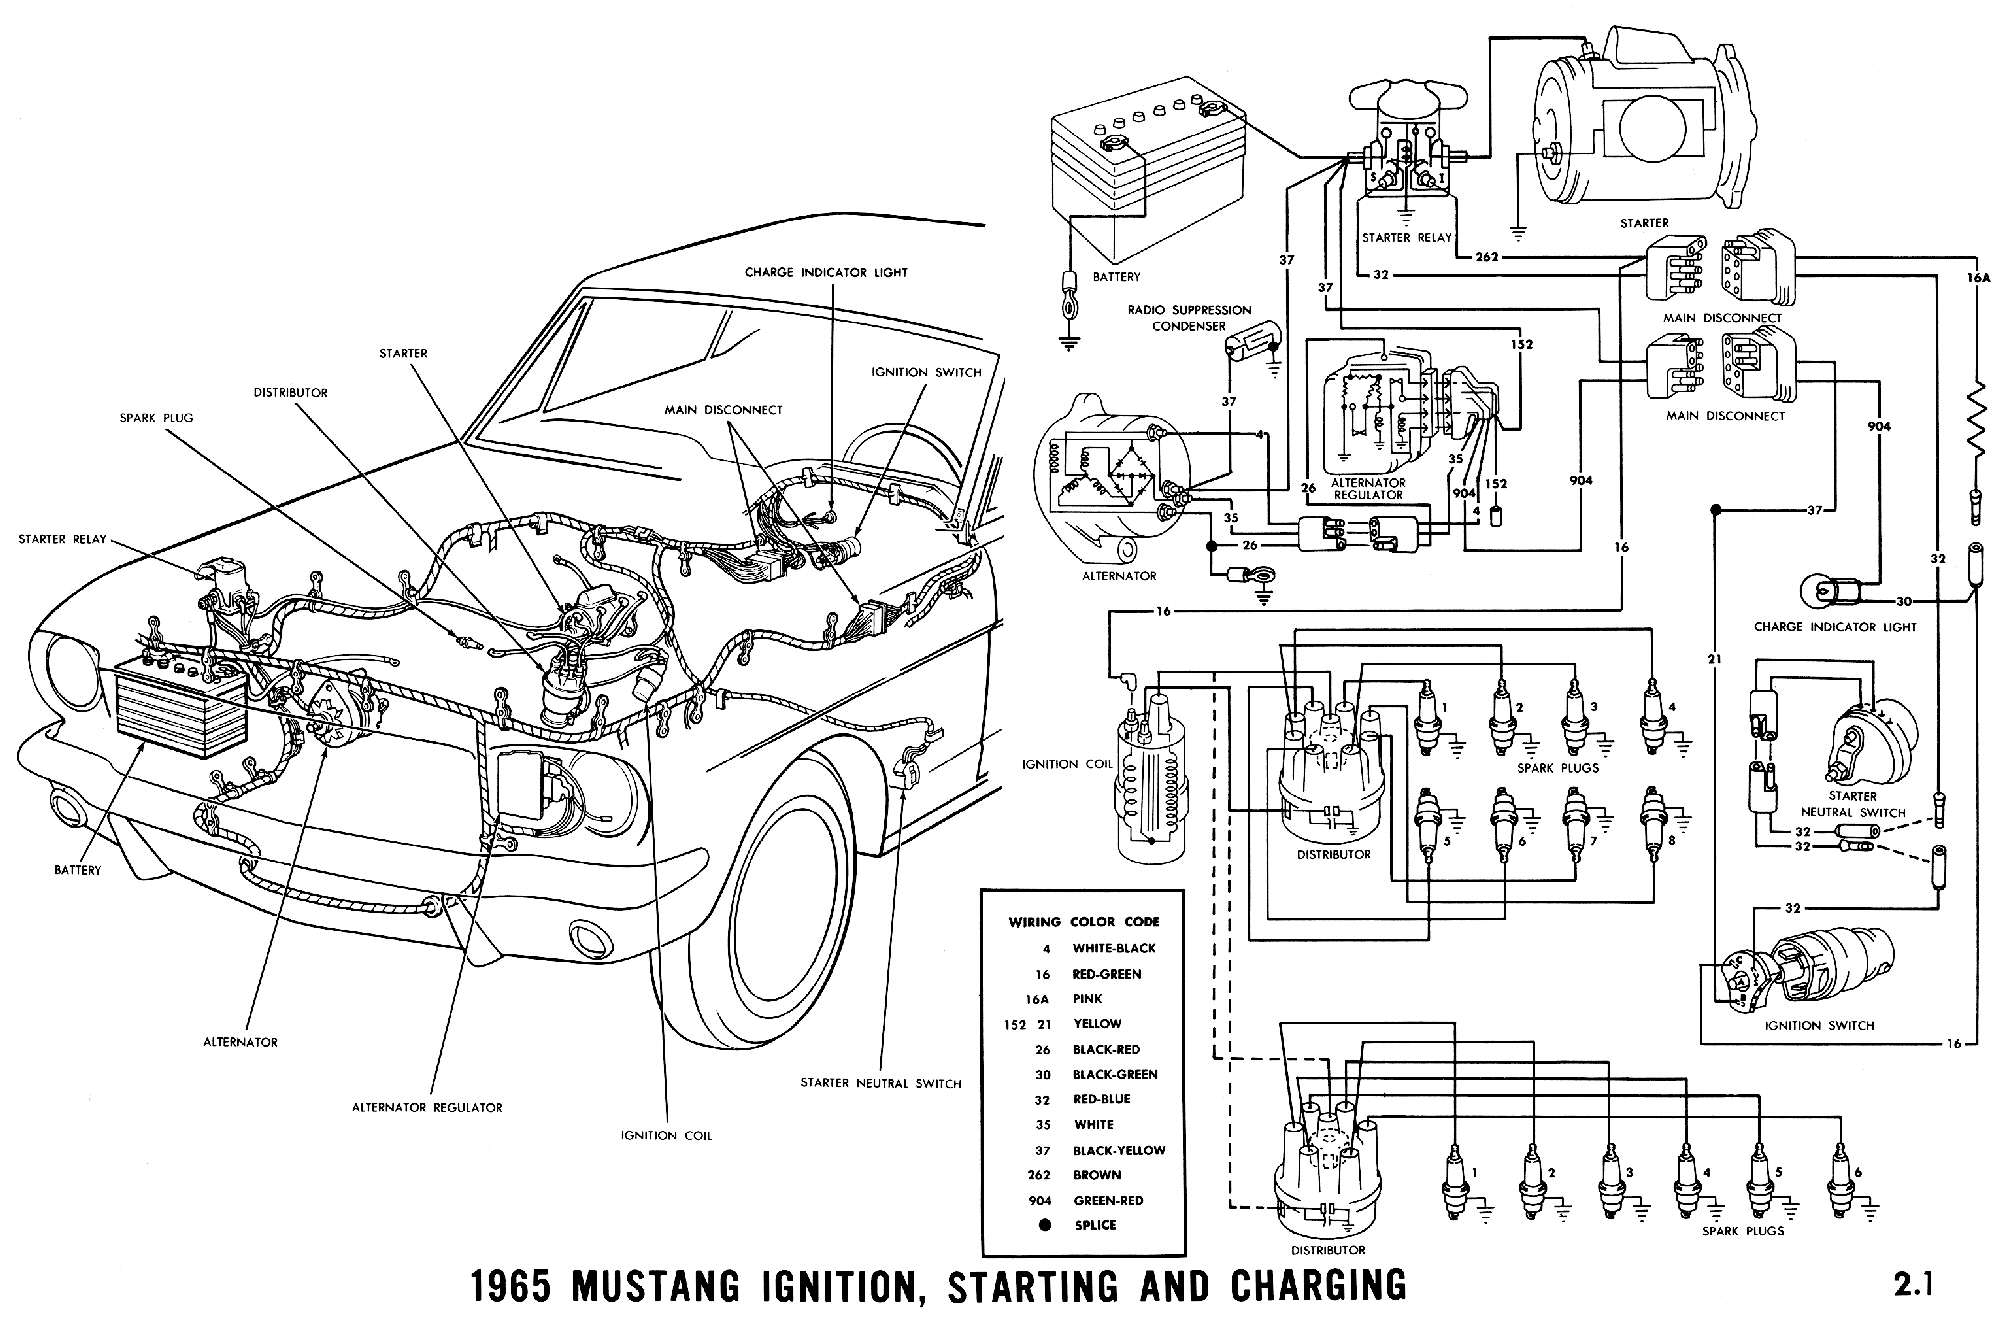 1965 Mustang Wiring Diagrams - Average Joe Restoration - 65 Mustang Wiring Diagram